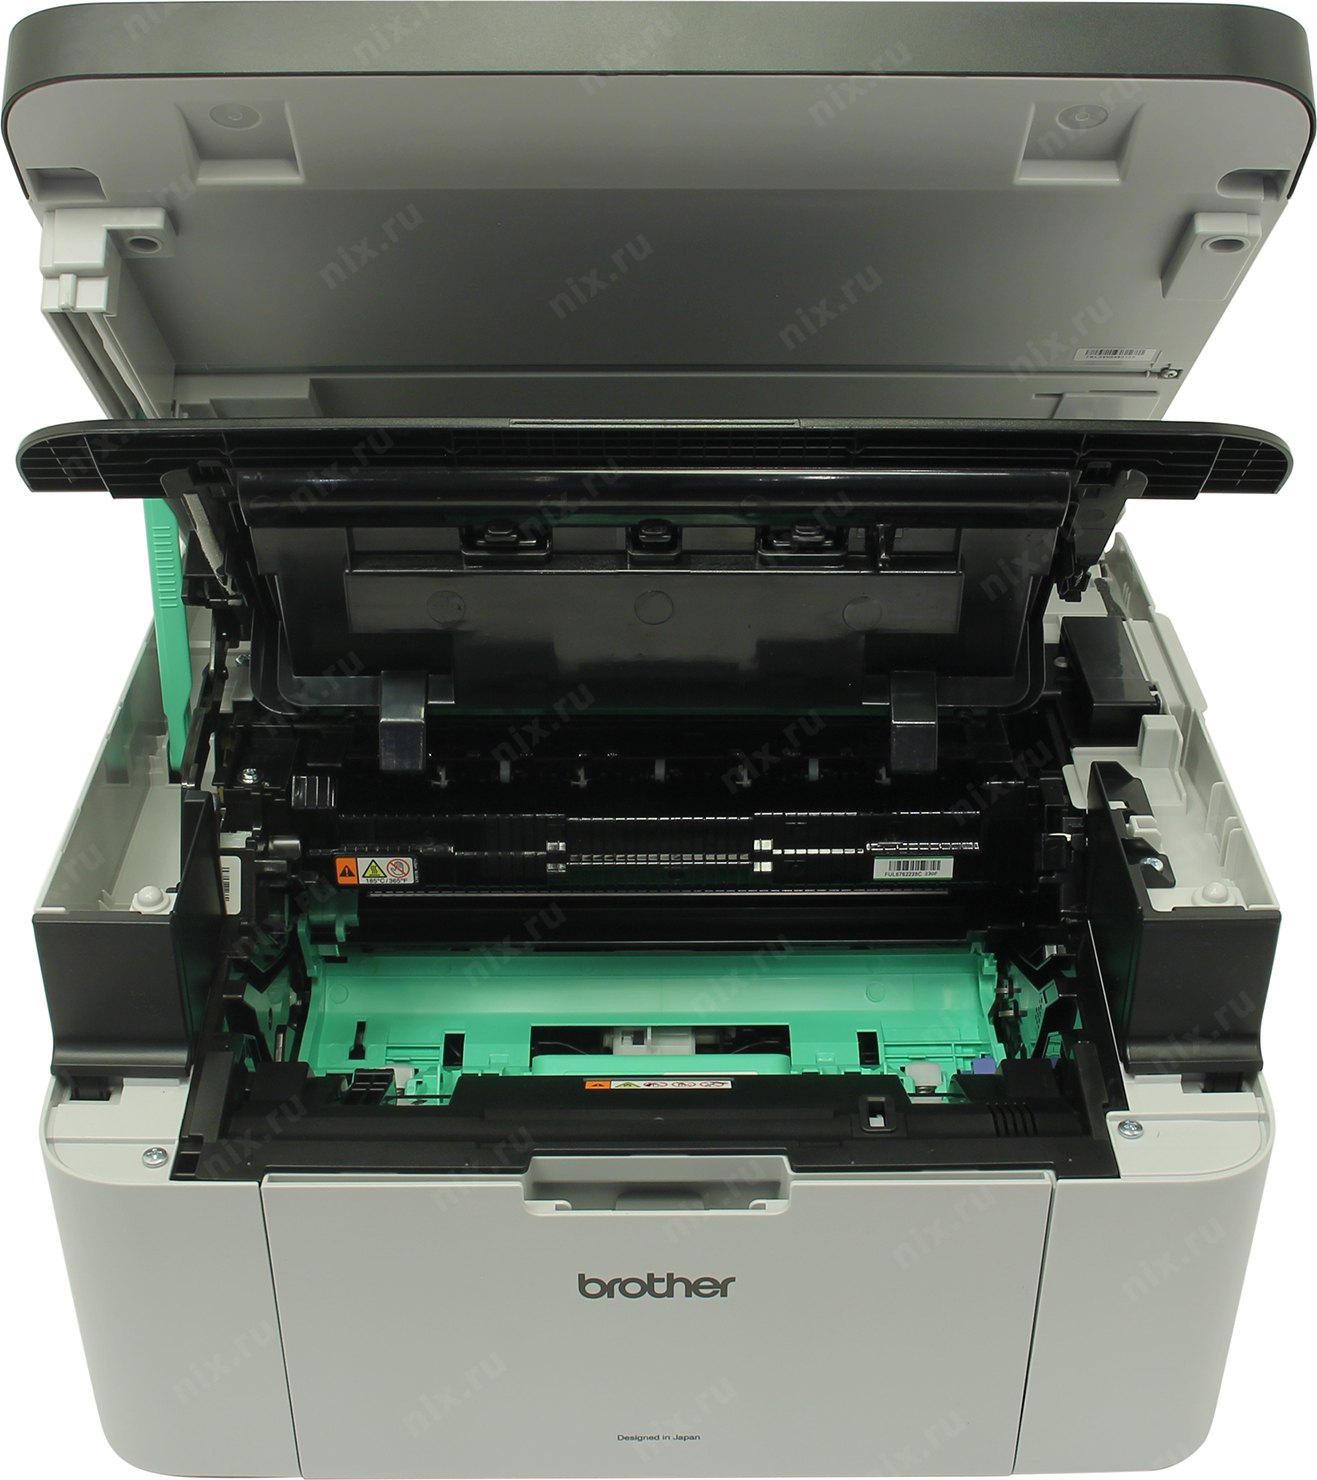 Бротхер принтер dcp. МФУ лазерное brother DCP-1510. Принтер brother DCP-1510r. Принтер бротхер 1510. МФУ лазерный brother DCP-1510, a4, лазерный, белый.